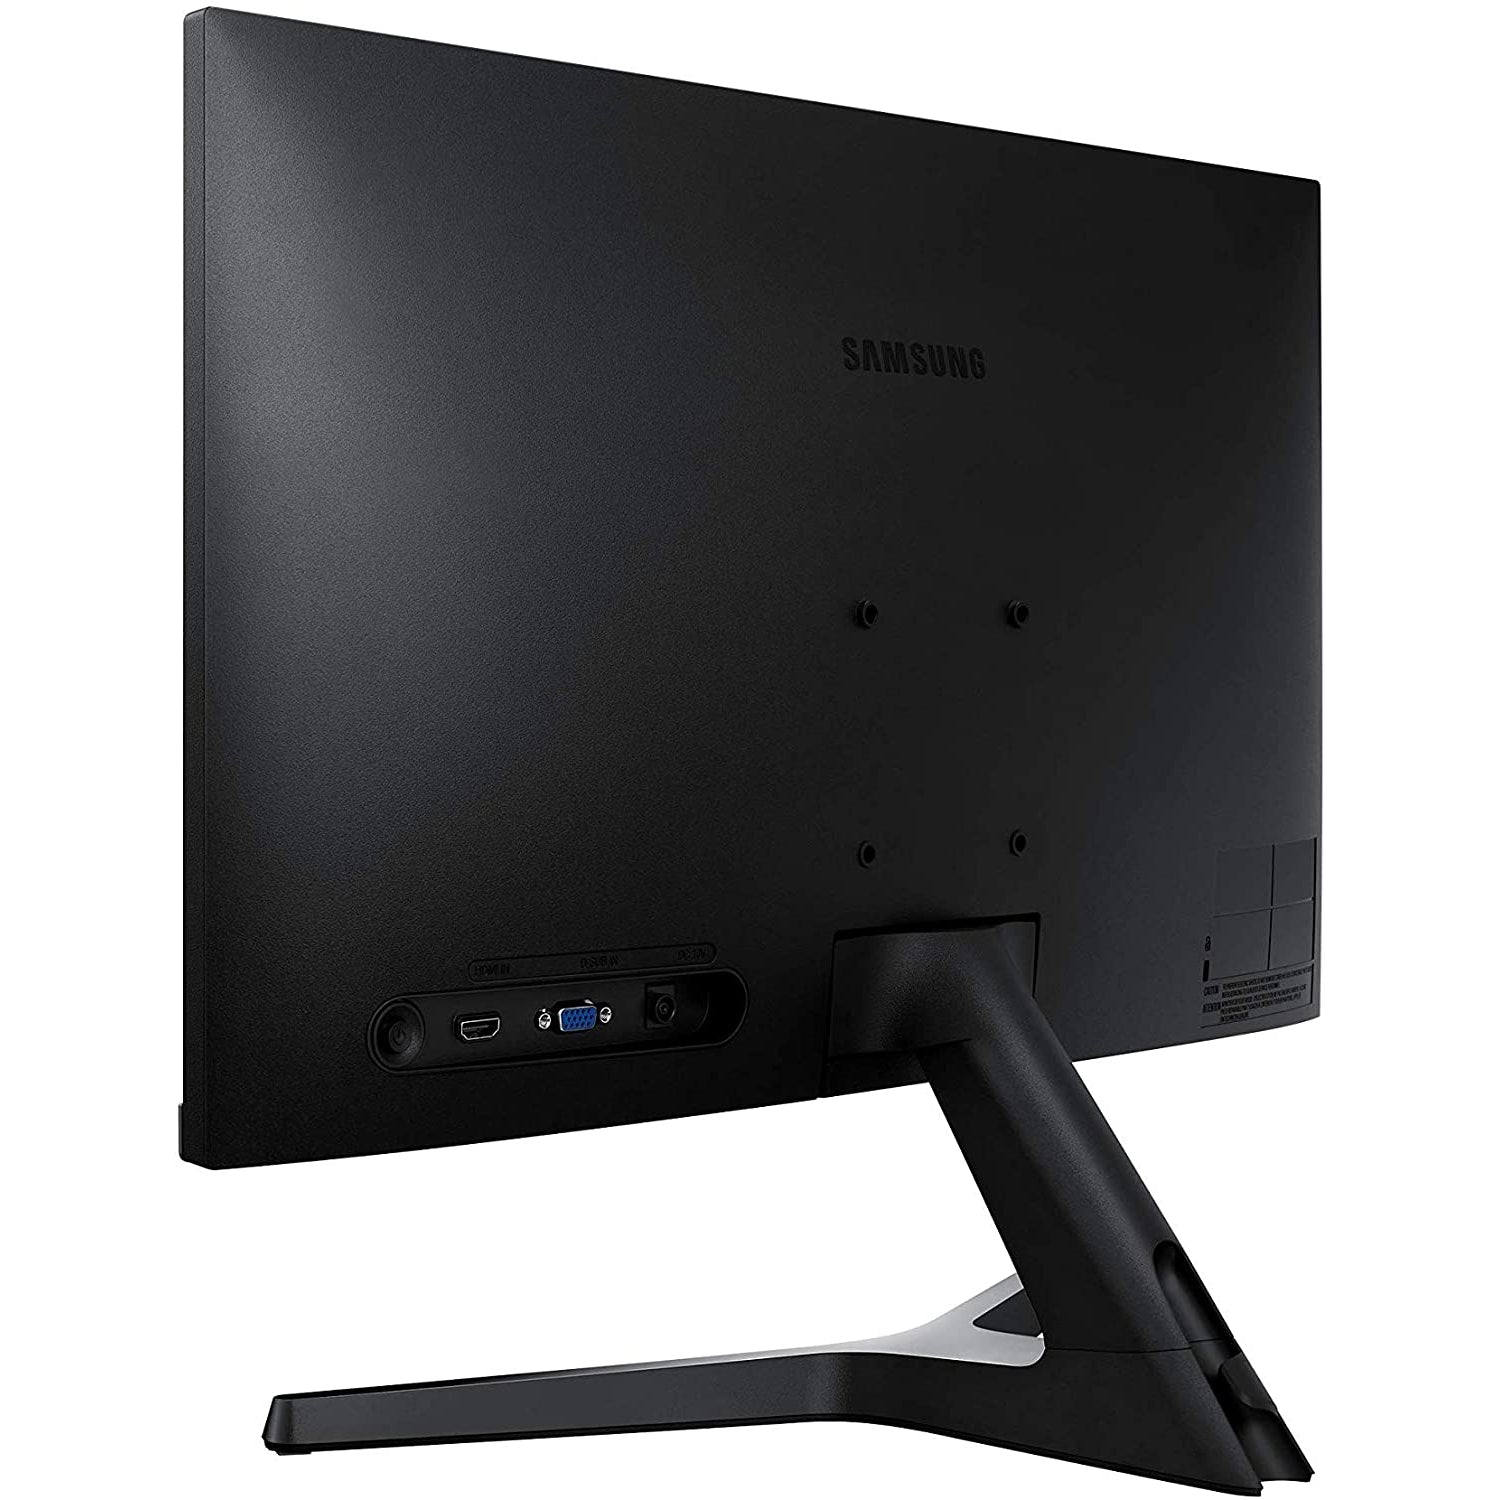 Samsung LS27R350FHUXEN 27" LED SR35 Gaming Monitor, Black